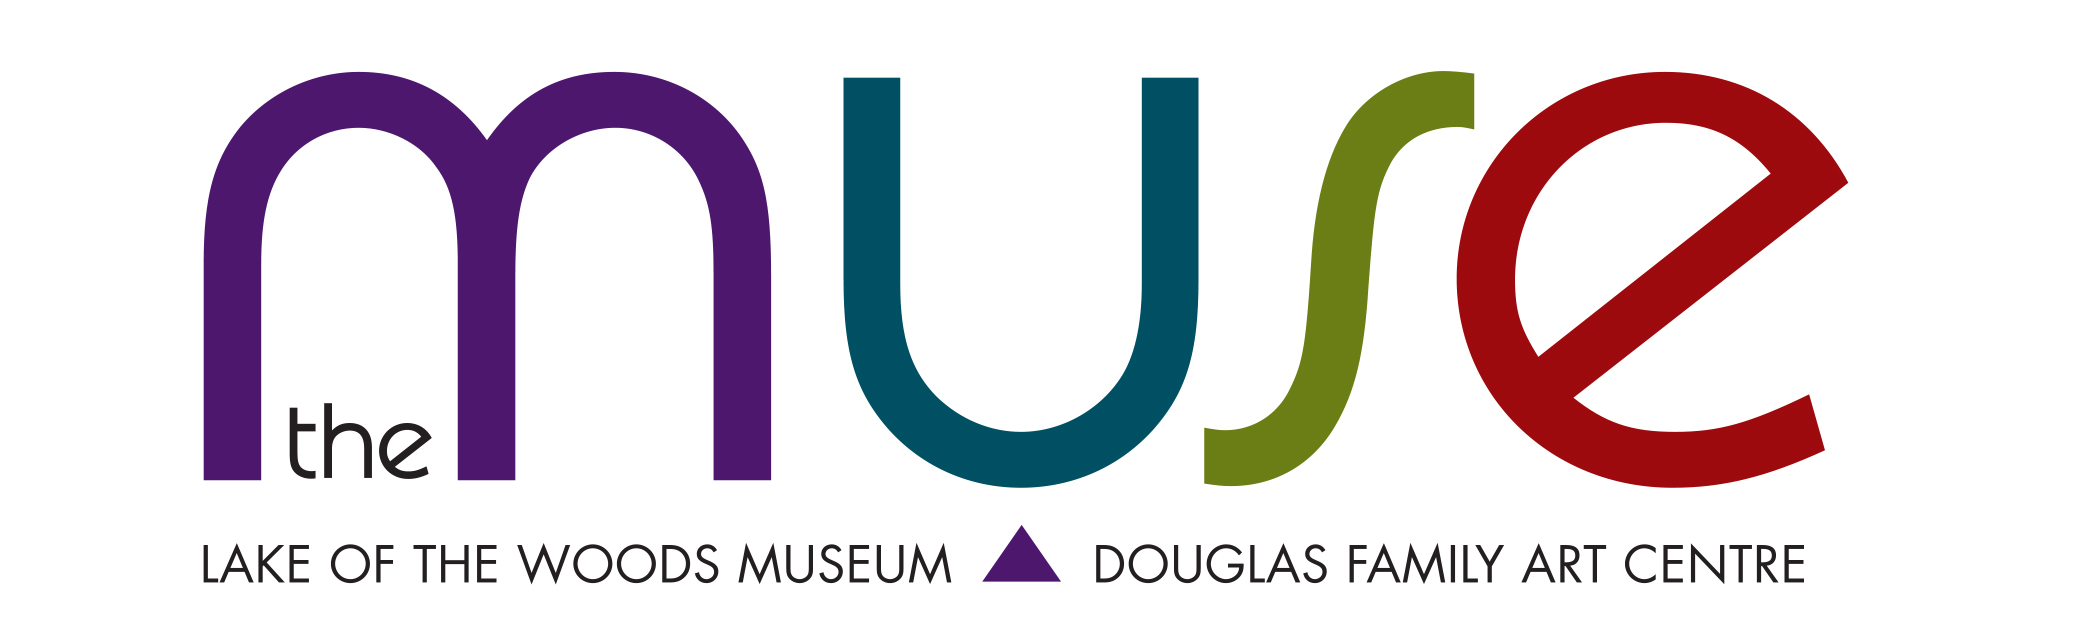 logo de muse lake of the woods museum douglas family art centre